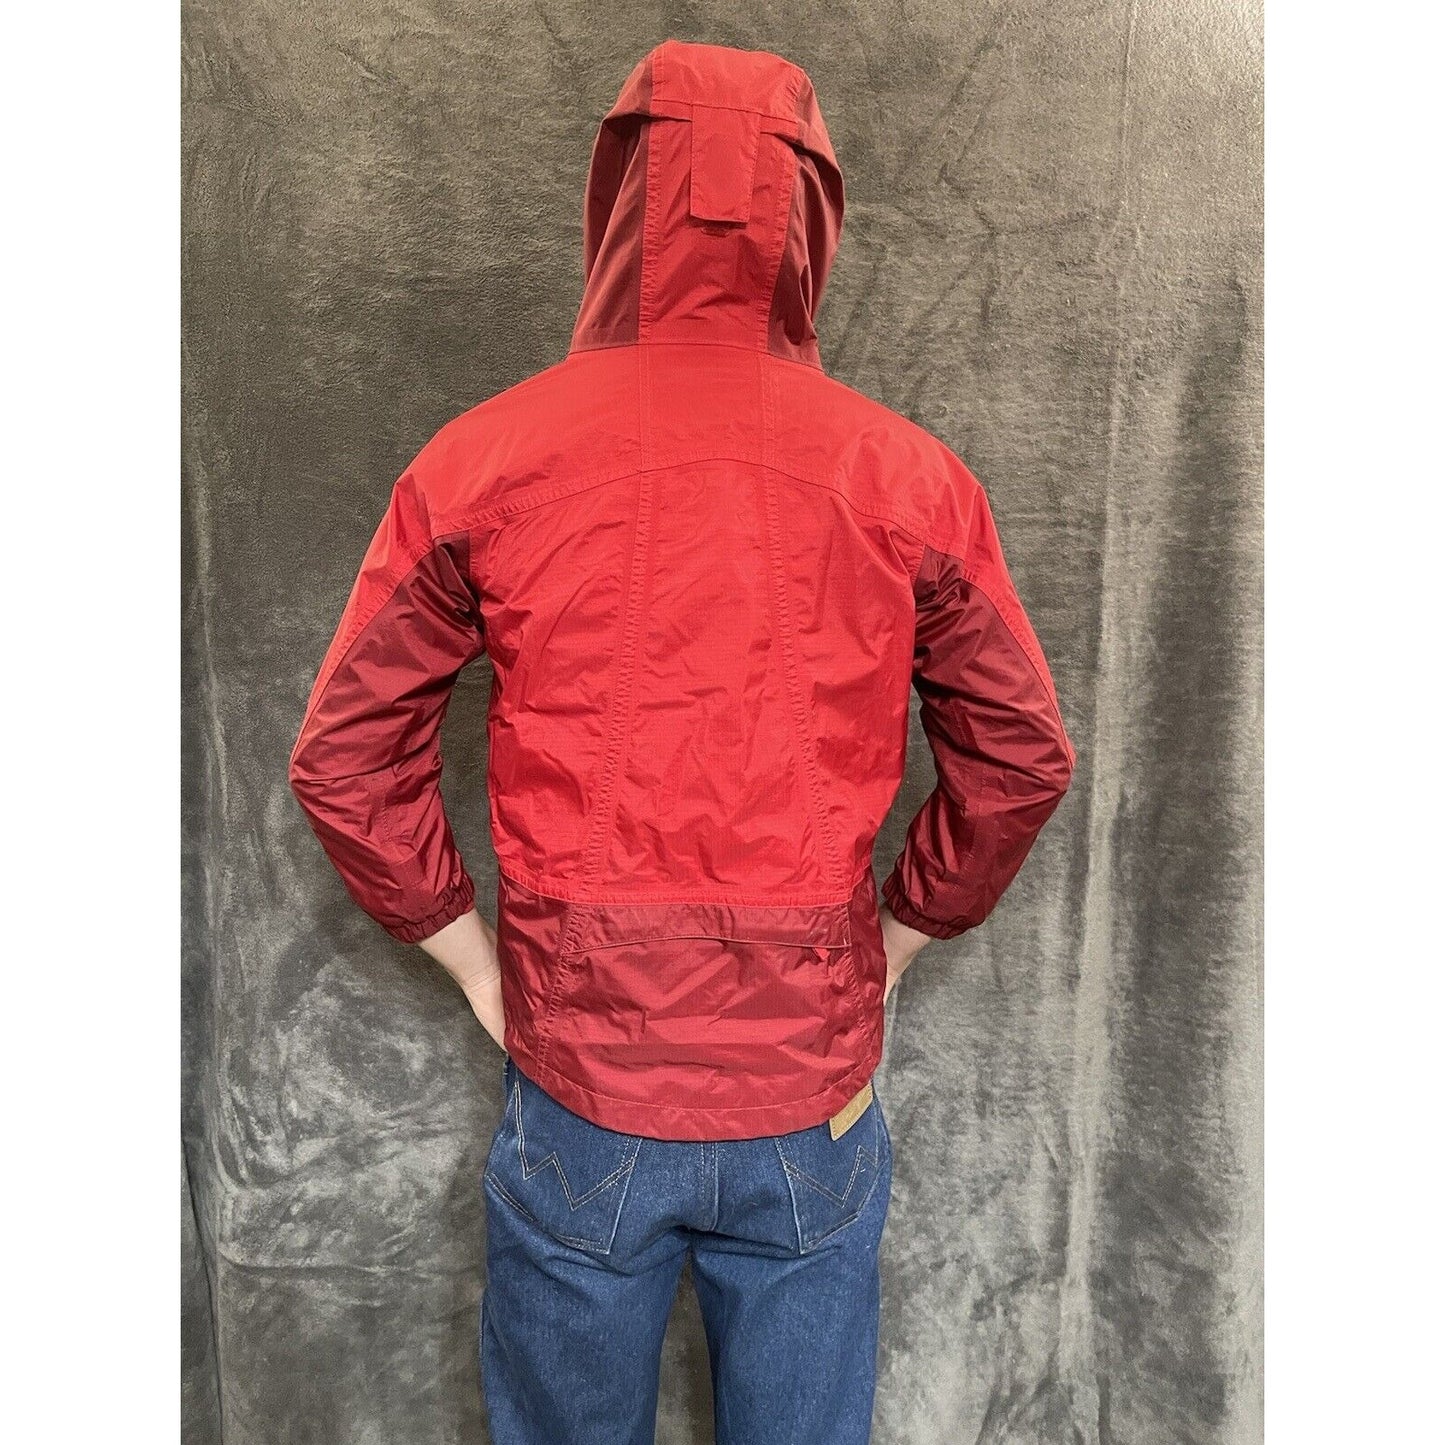 boy's L.L. Bean nylon poly medium 10-12 red jacket